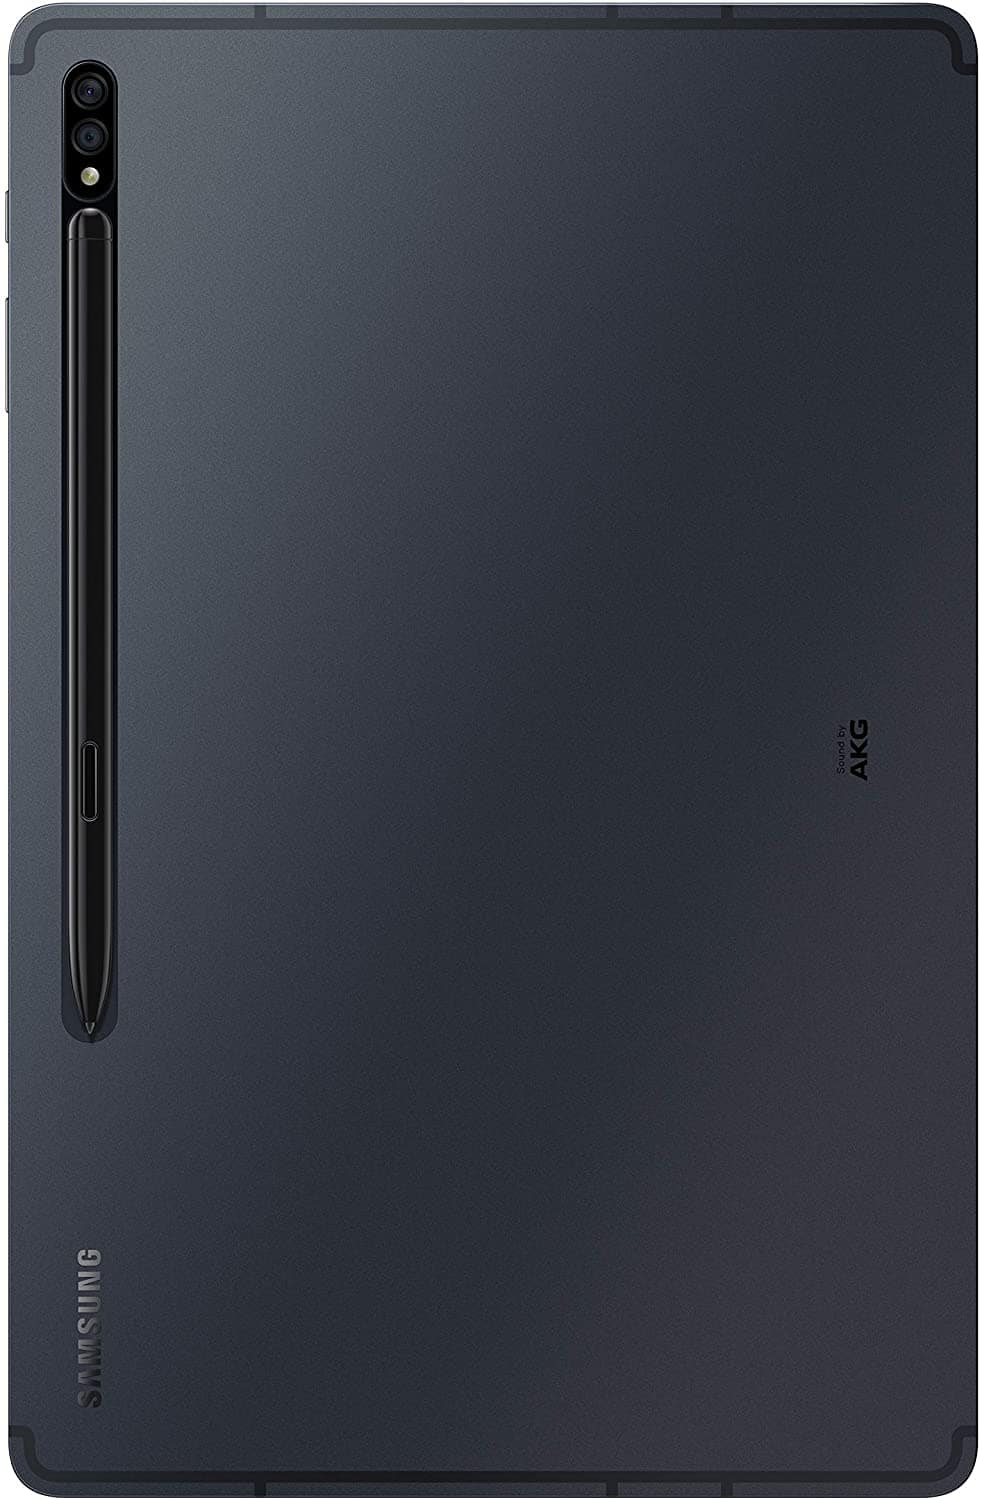 New]Samsung Galaxy Tab S7 Plus T970 8GB RAM 256GB Wifi model black tablet -  BE FORWARD Store